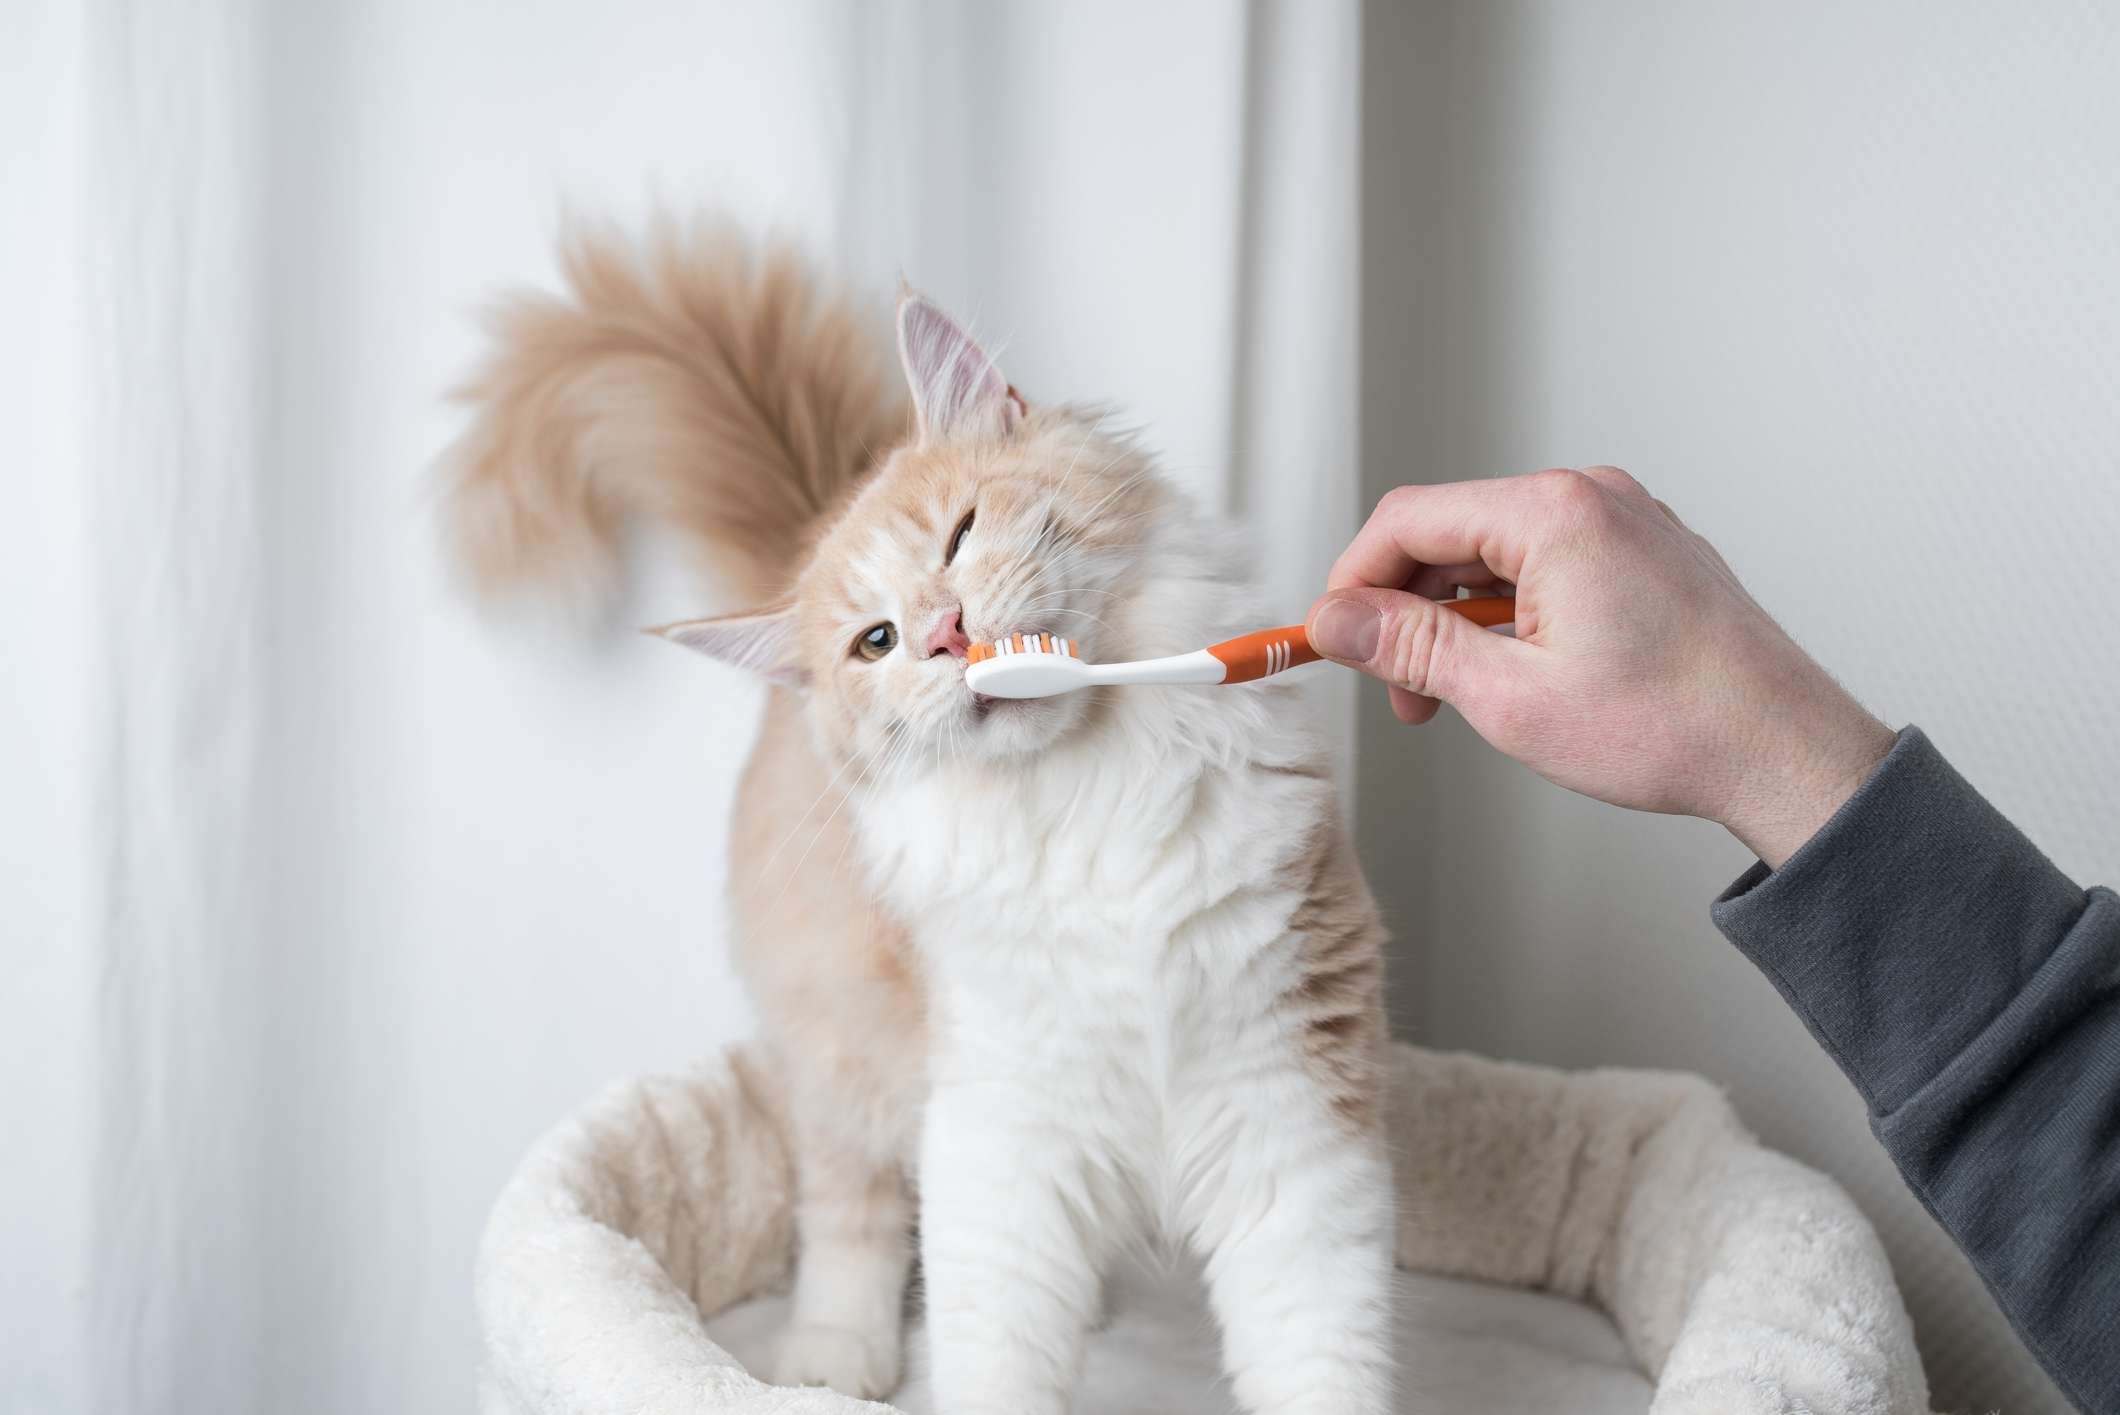 Brushing cat's teeth